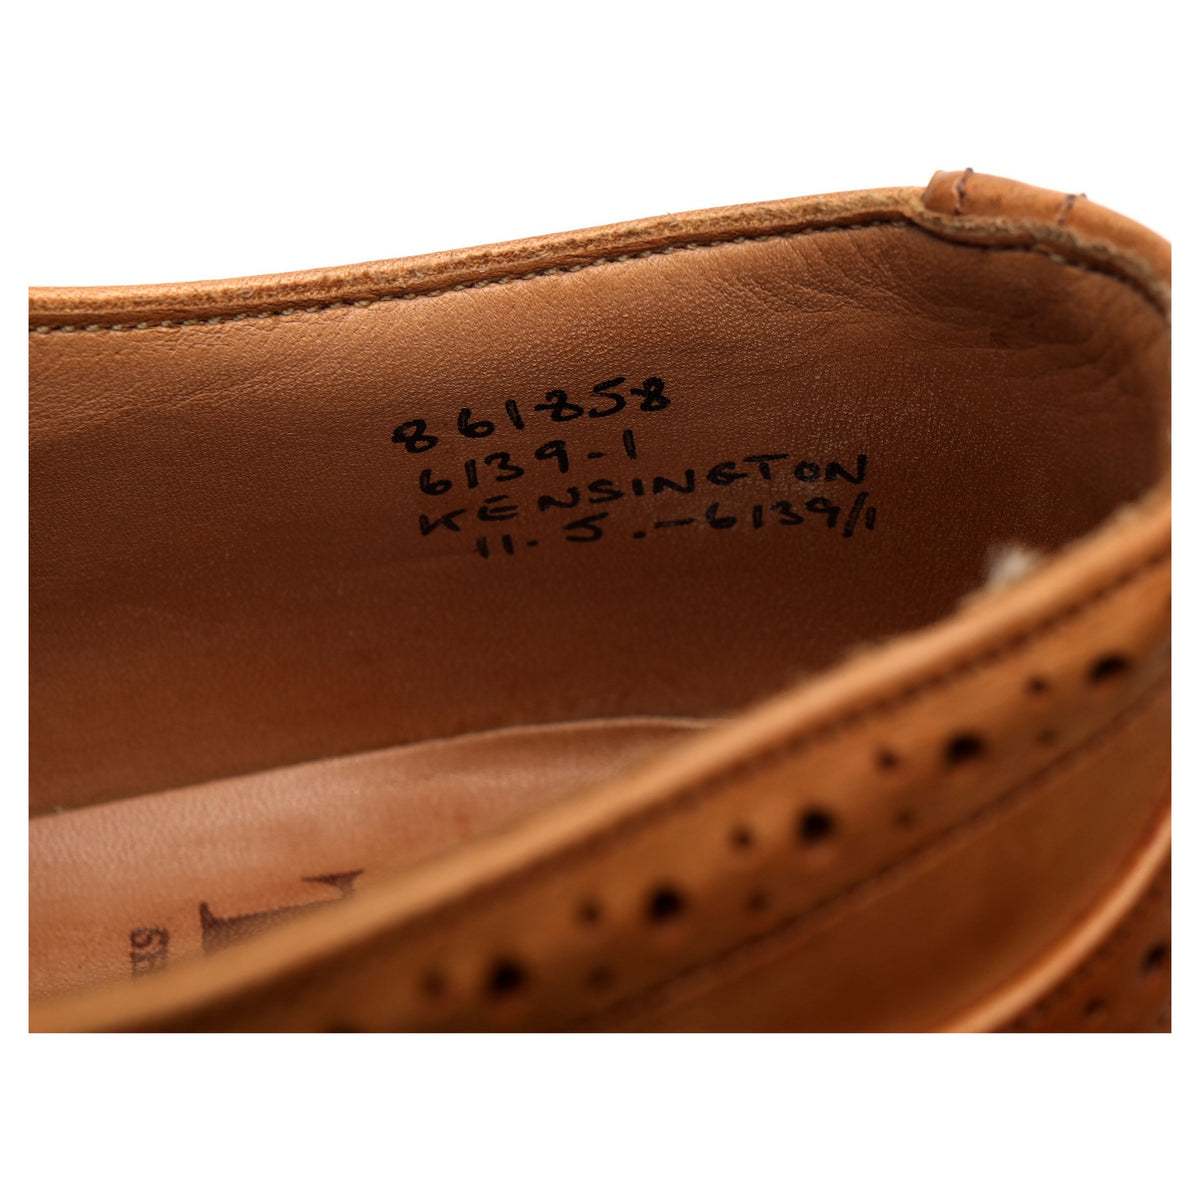 &#39;Kensington&#39; Tan Brown Leather Oxford Brogues UK 11